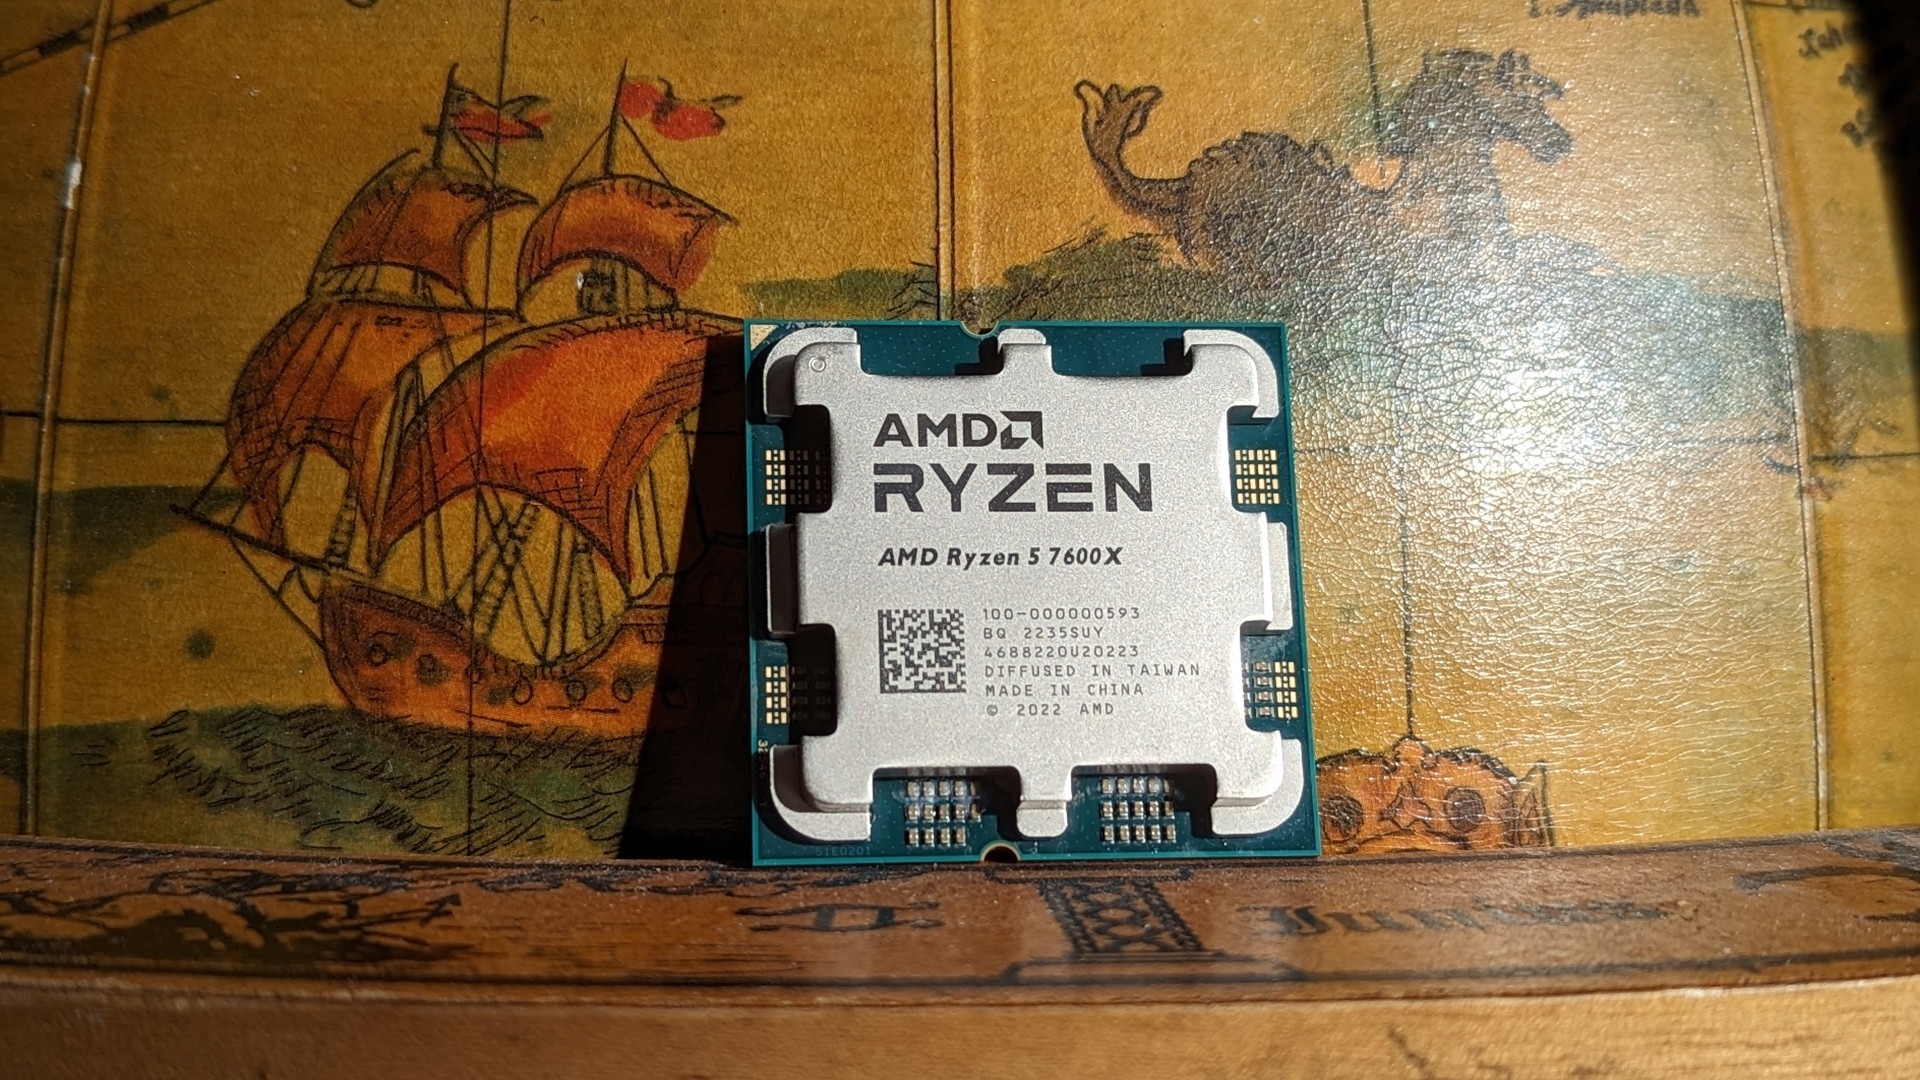 The AMD Ryzen 5 7600X against a drinks globe